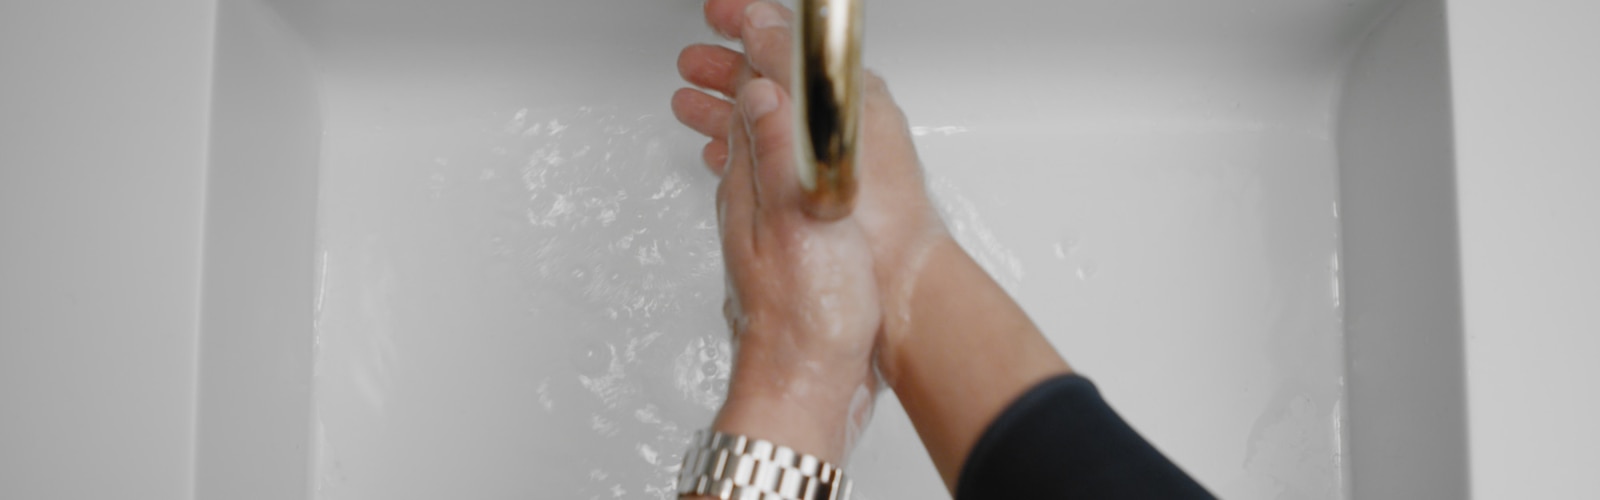 Dve ruky pod tečúcou vodou z kohútika